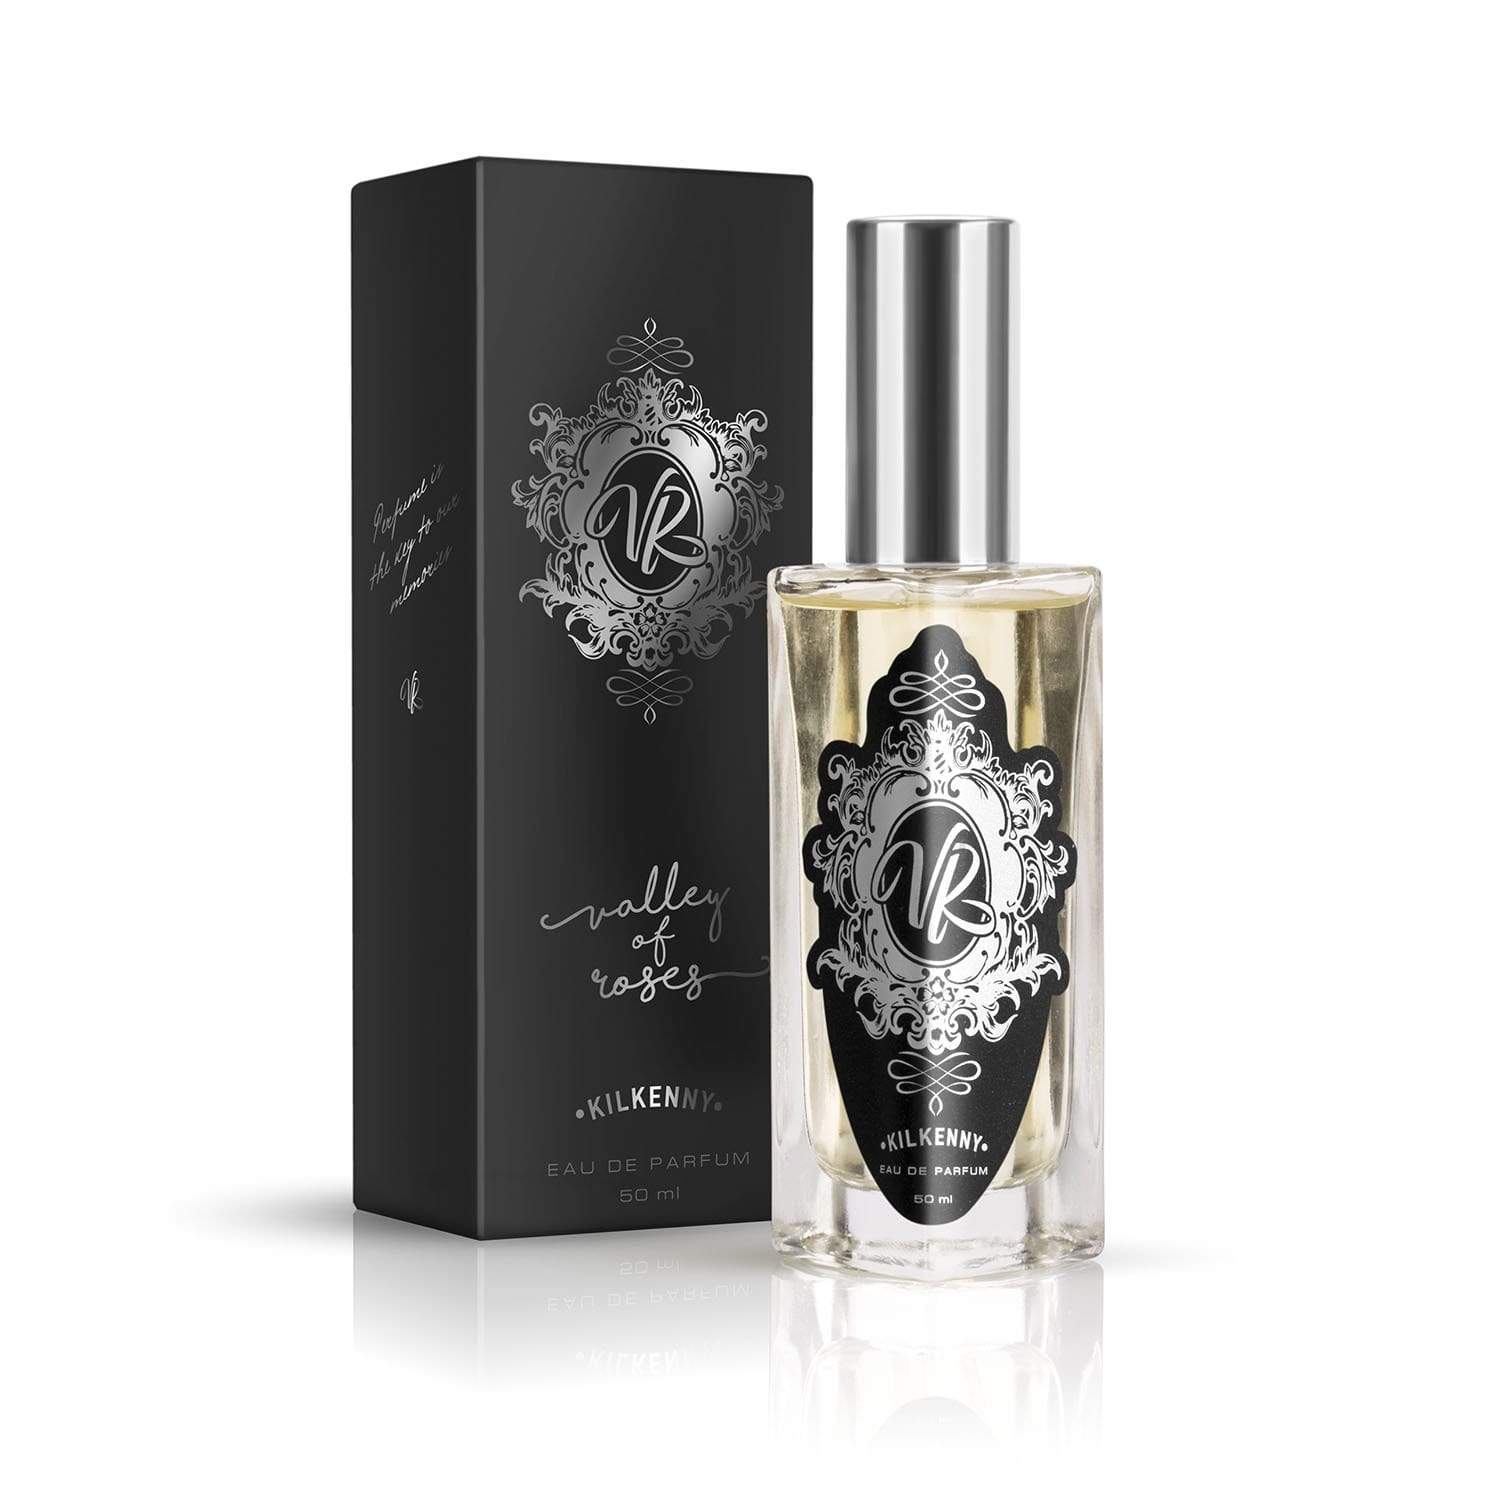 CHANEL Bleu De CHANEL Parfum 100ml With Gift Box